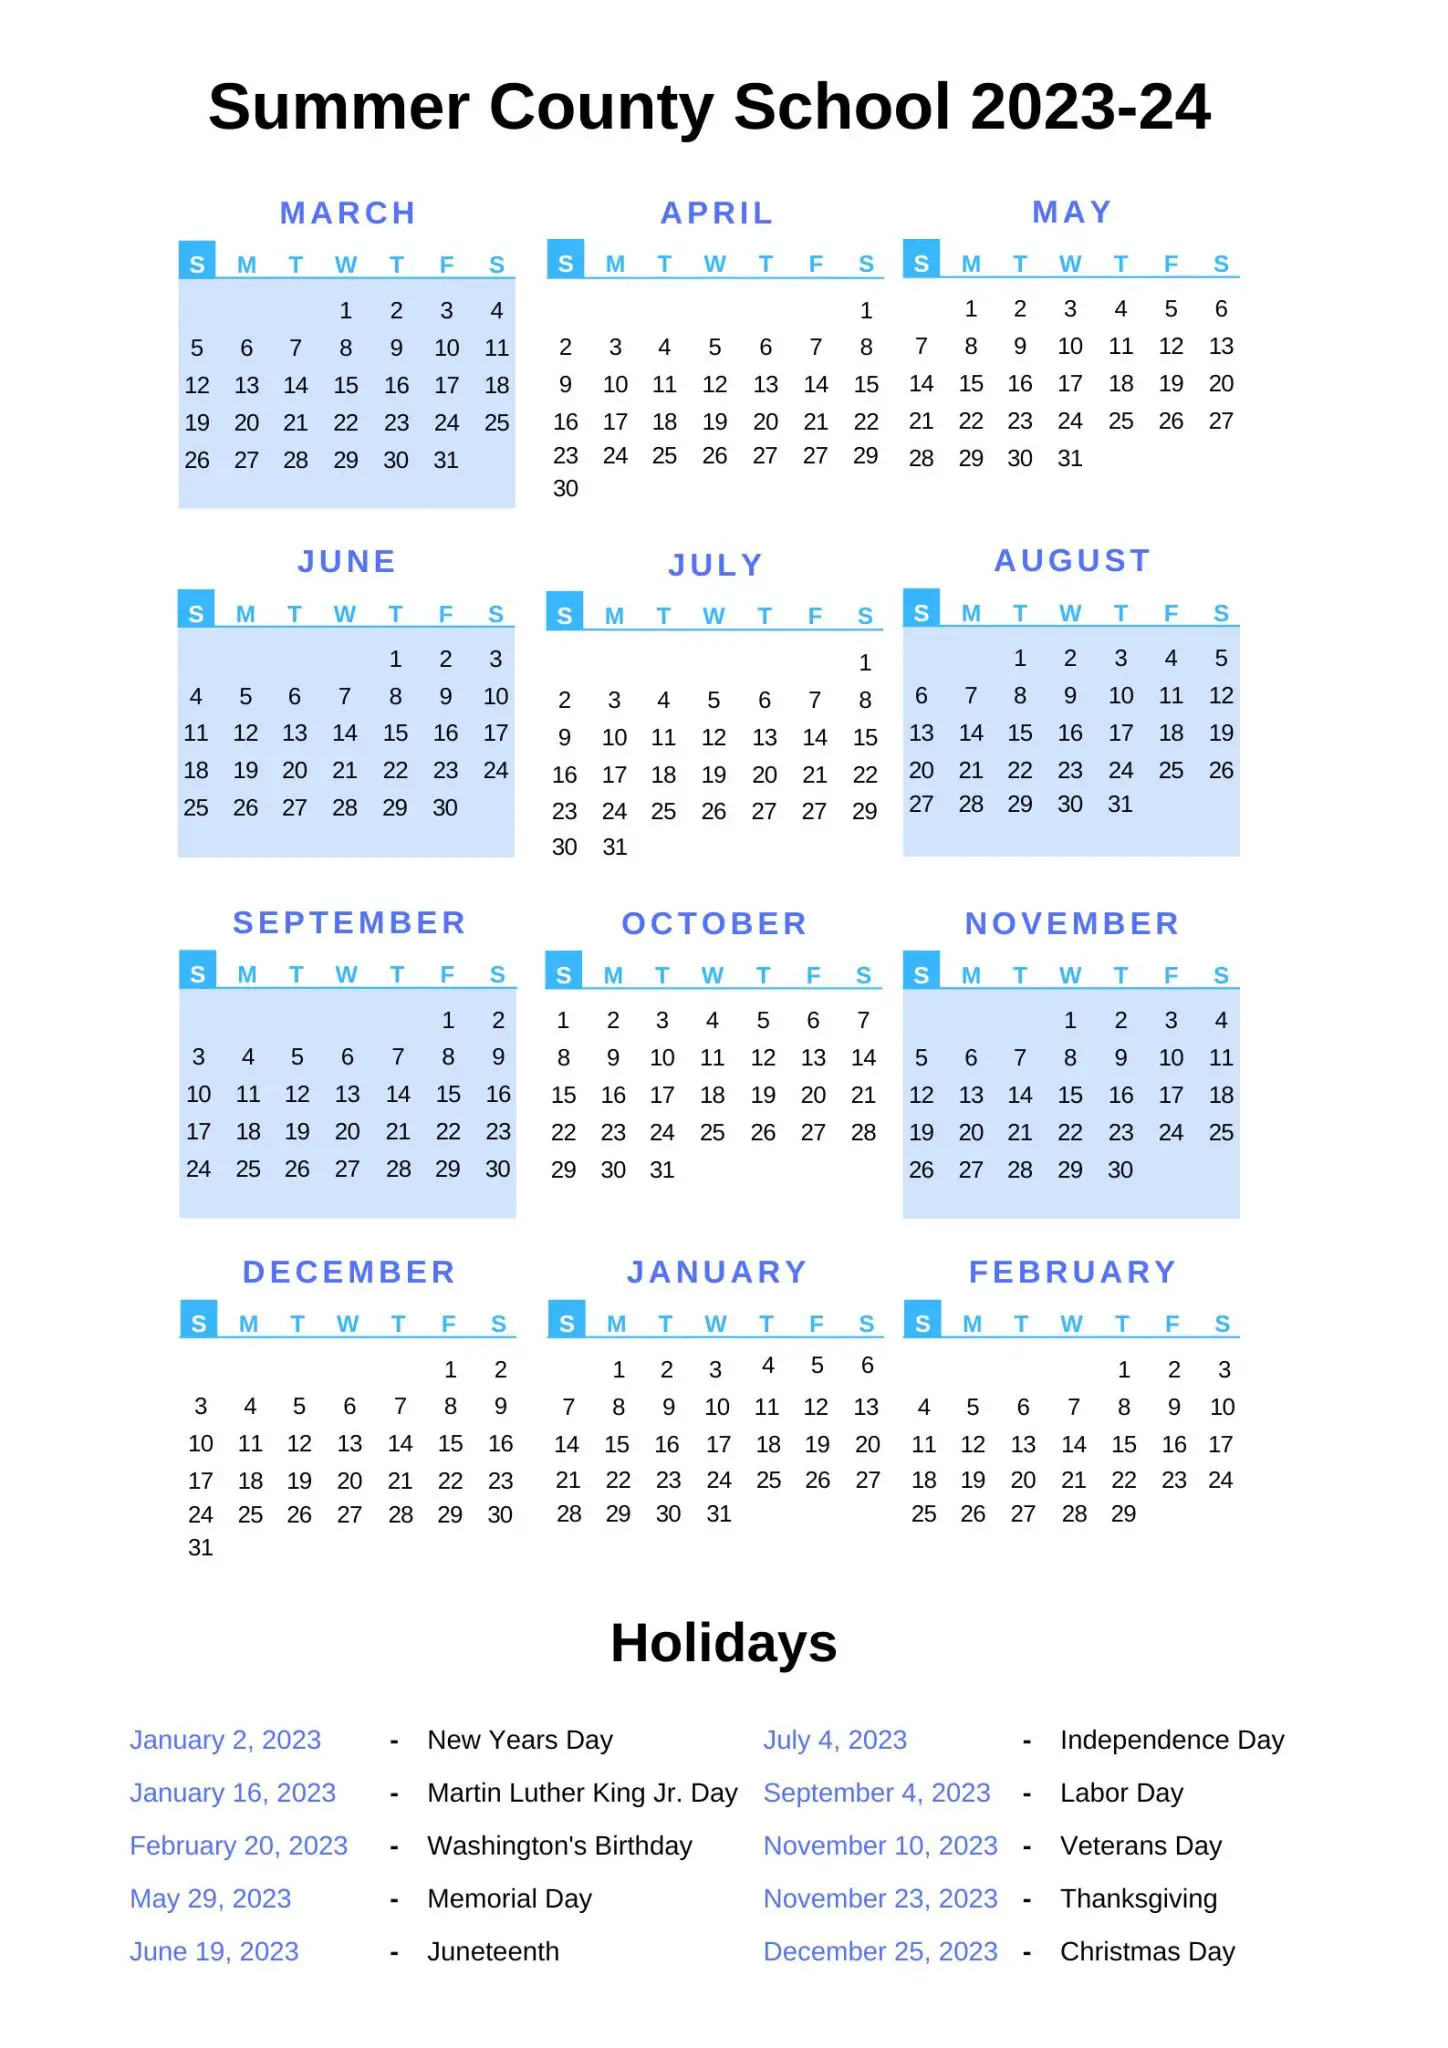 Sumner County Schools Calendar 2023 24 With Holidays